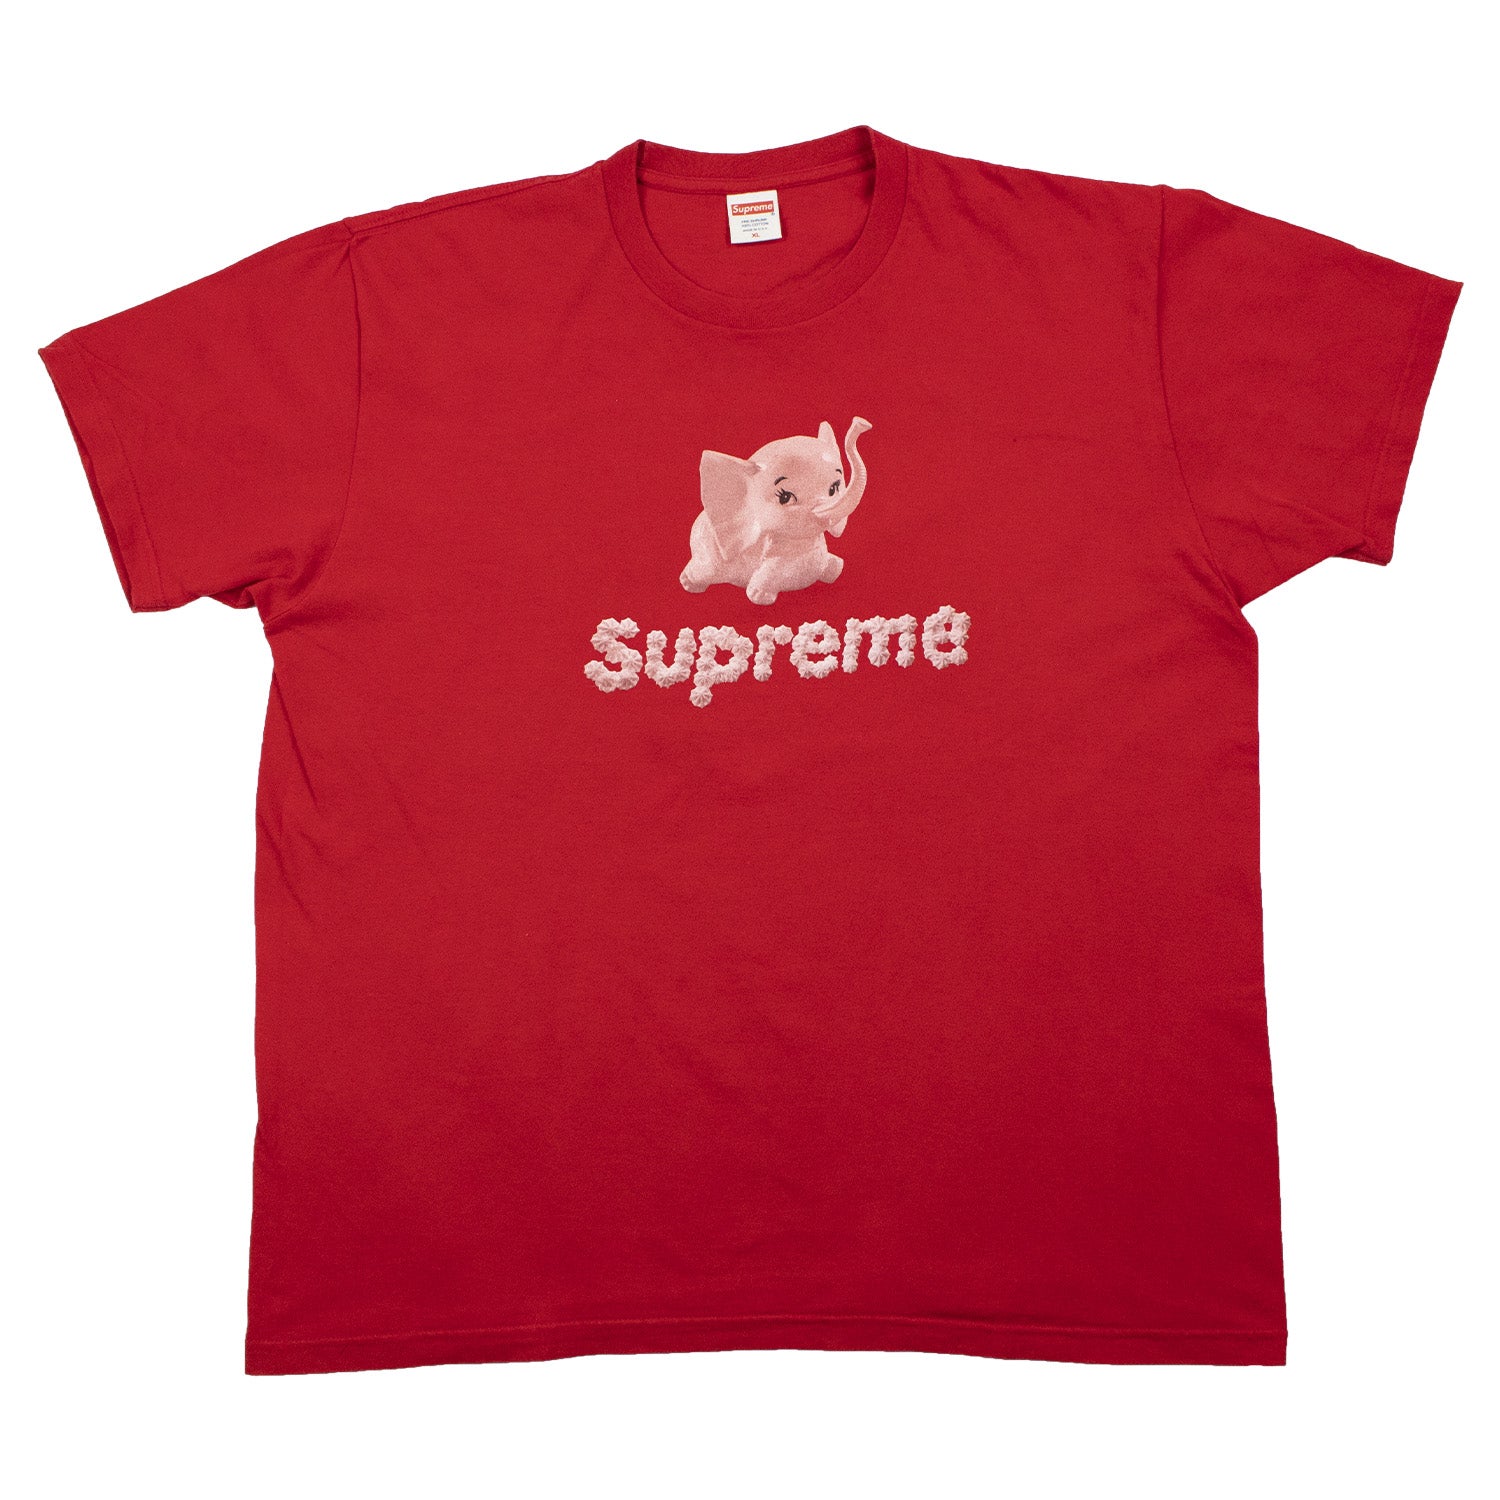 supreme t shirt elephant